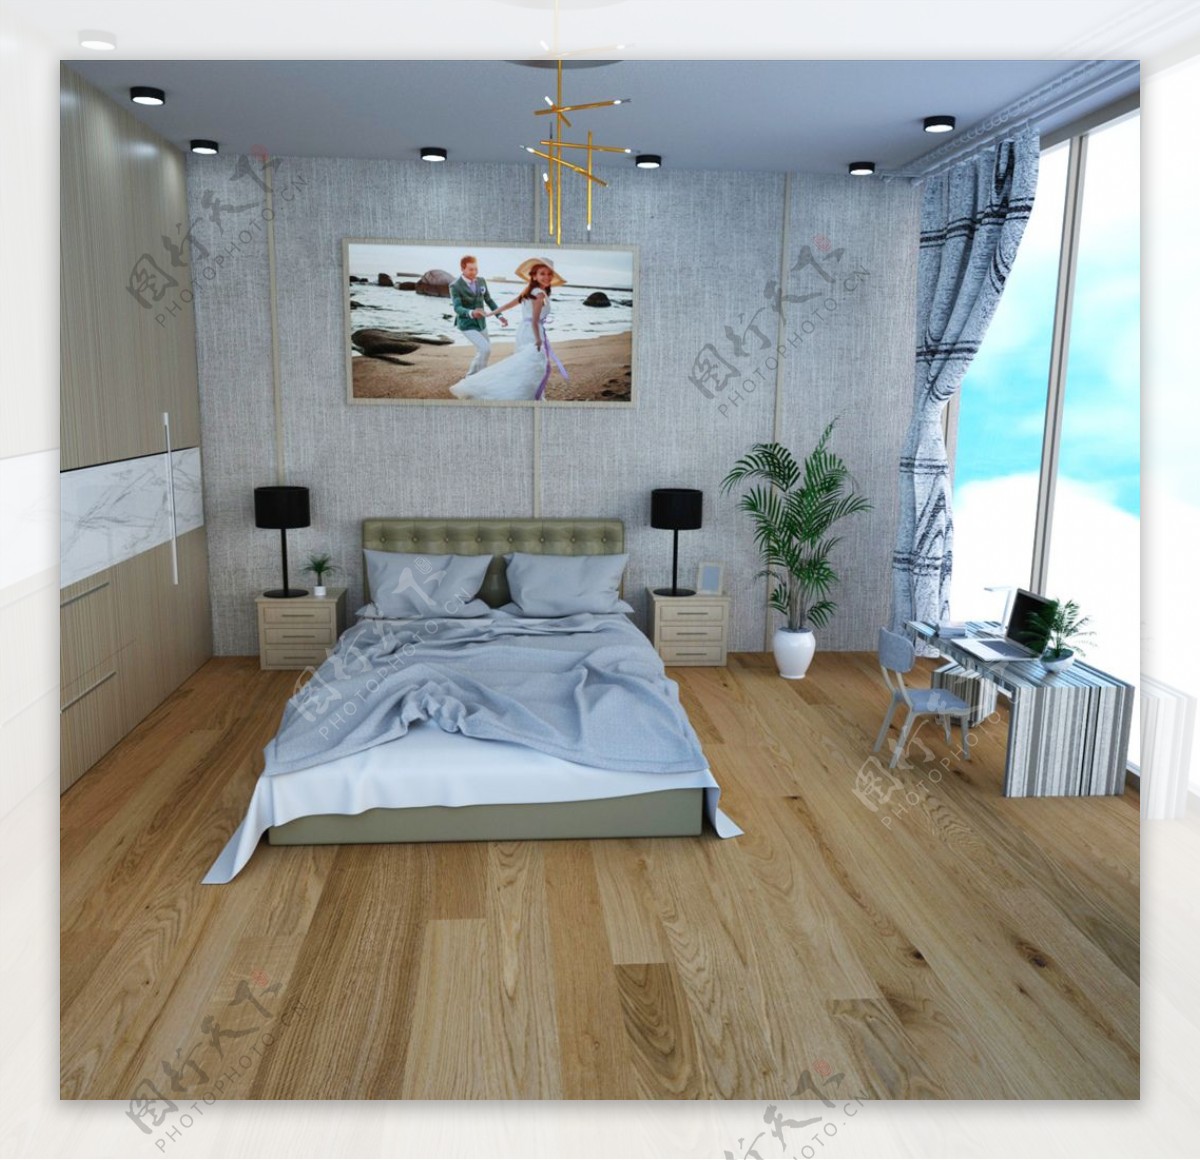 C4D模型建模卧室OC渲染家具